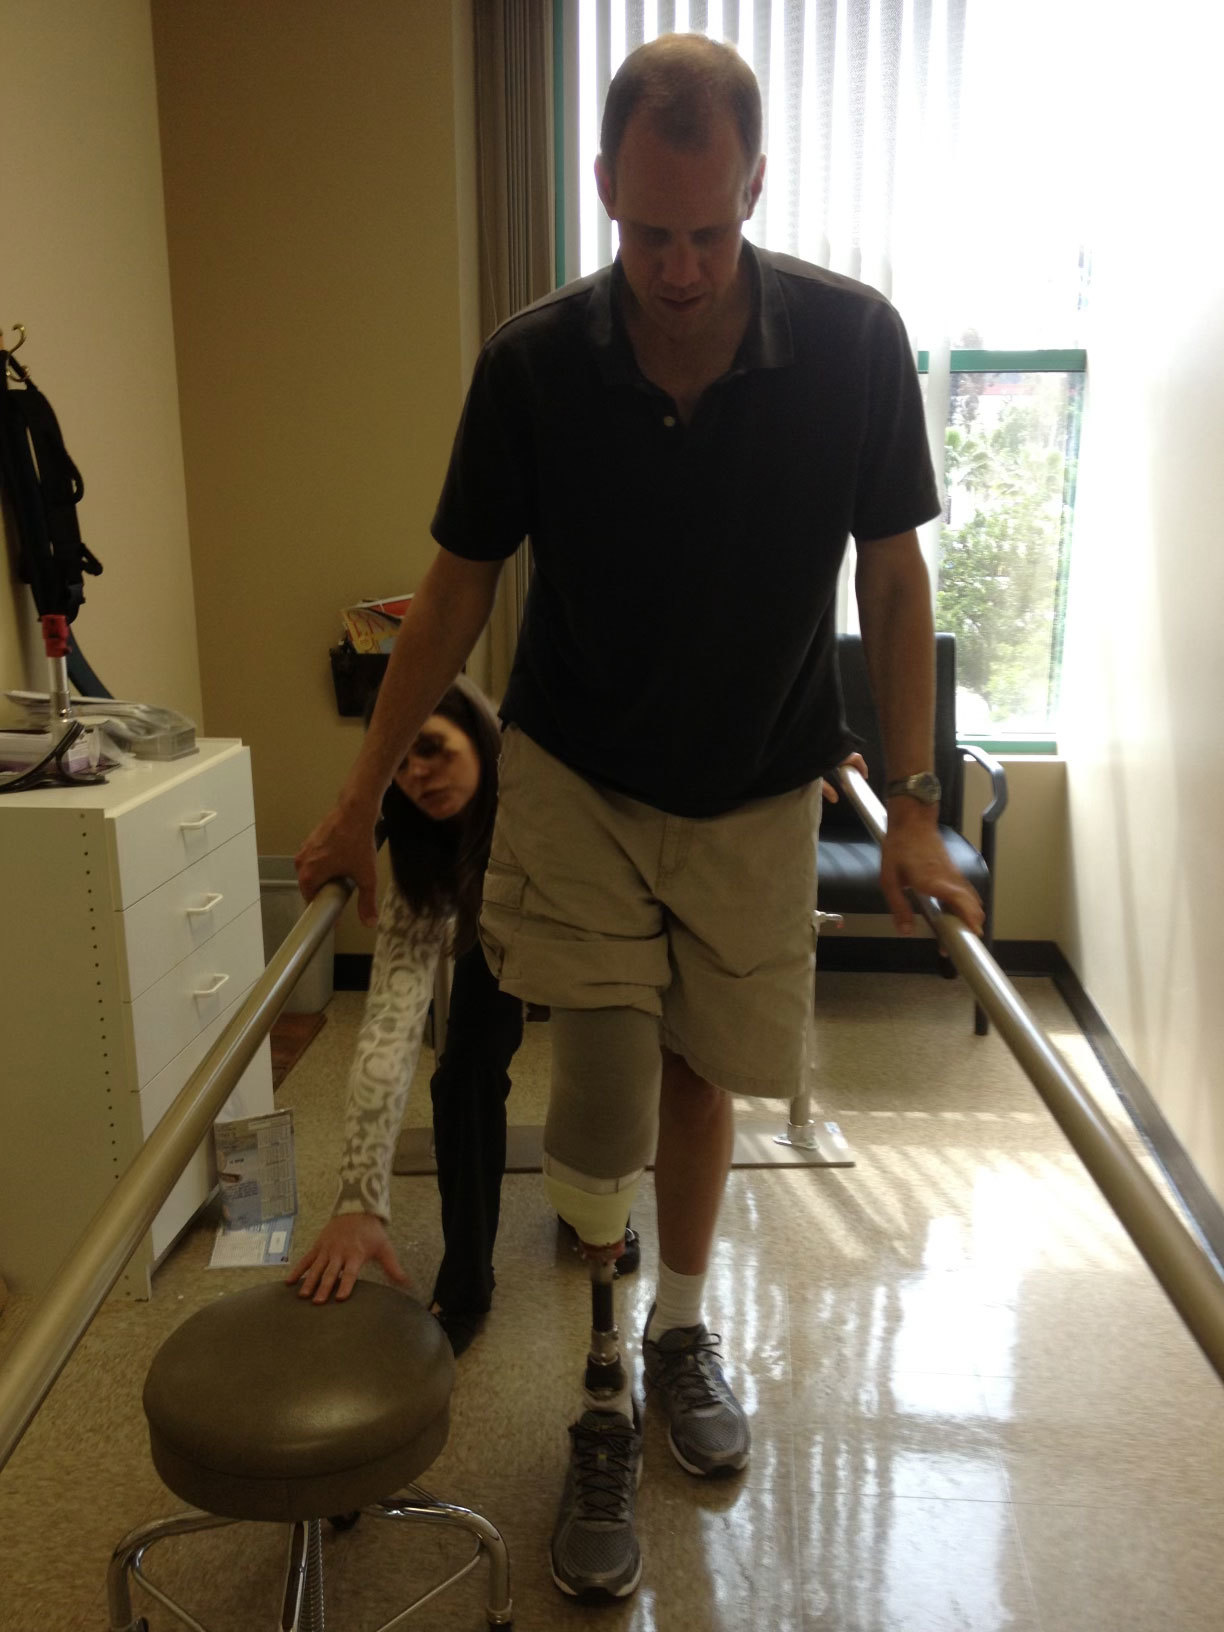 Doug Clark at a rehabilitation program practicing walking with his prosthetic leg.